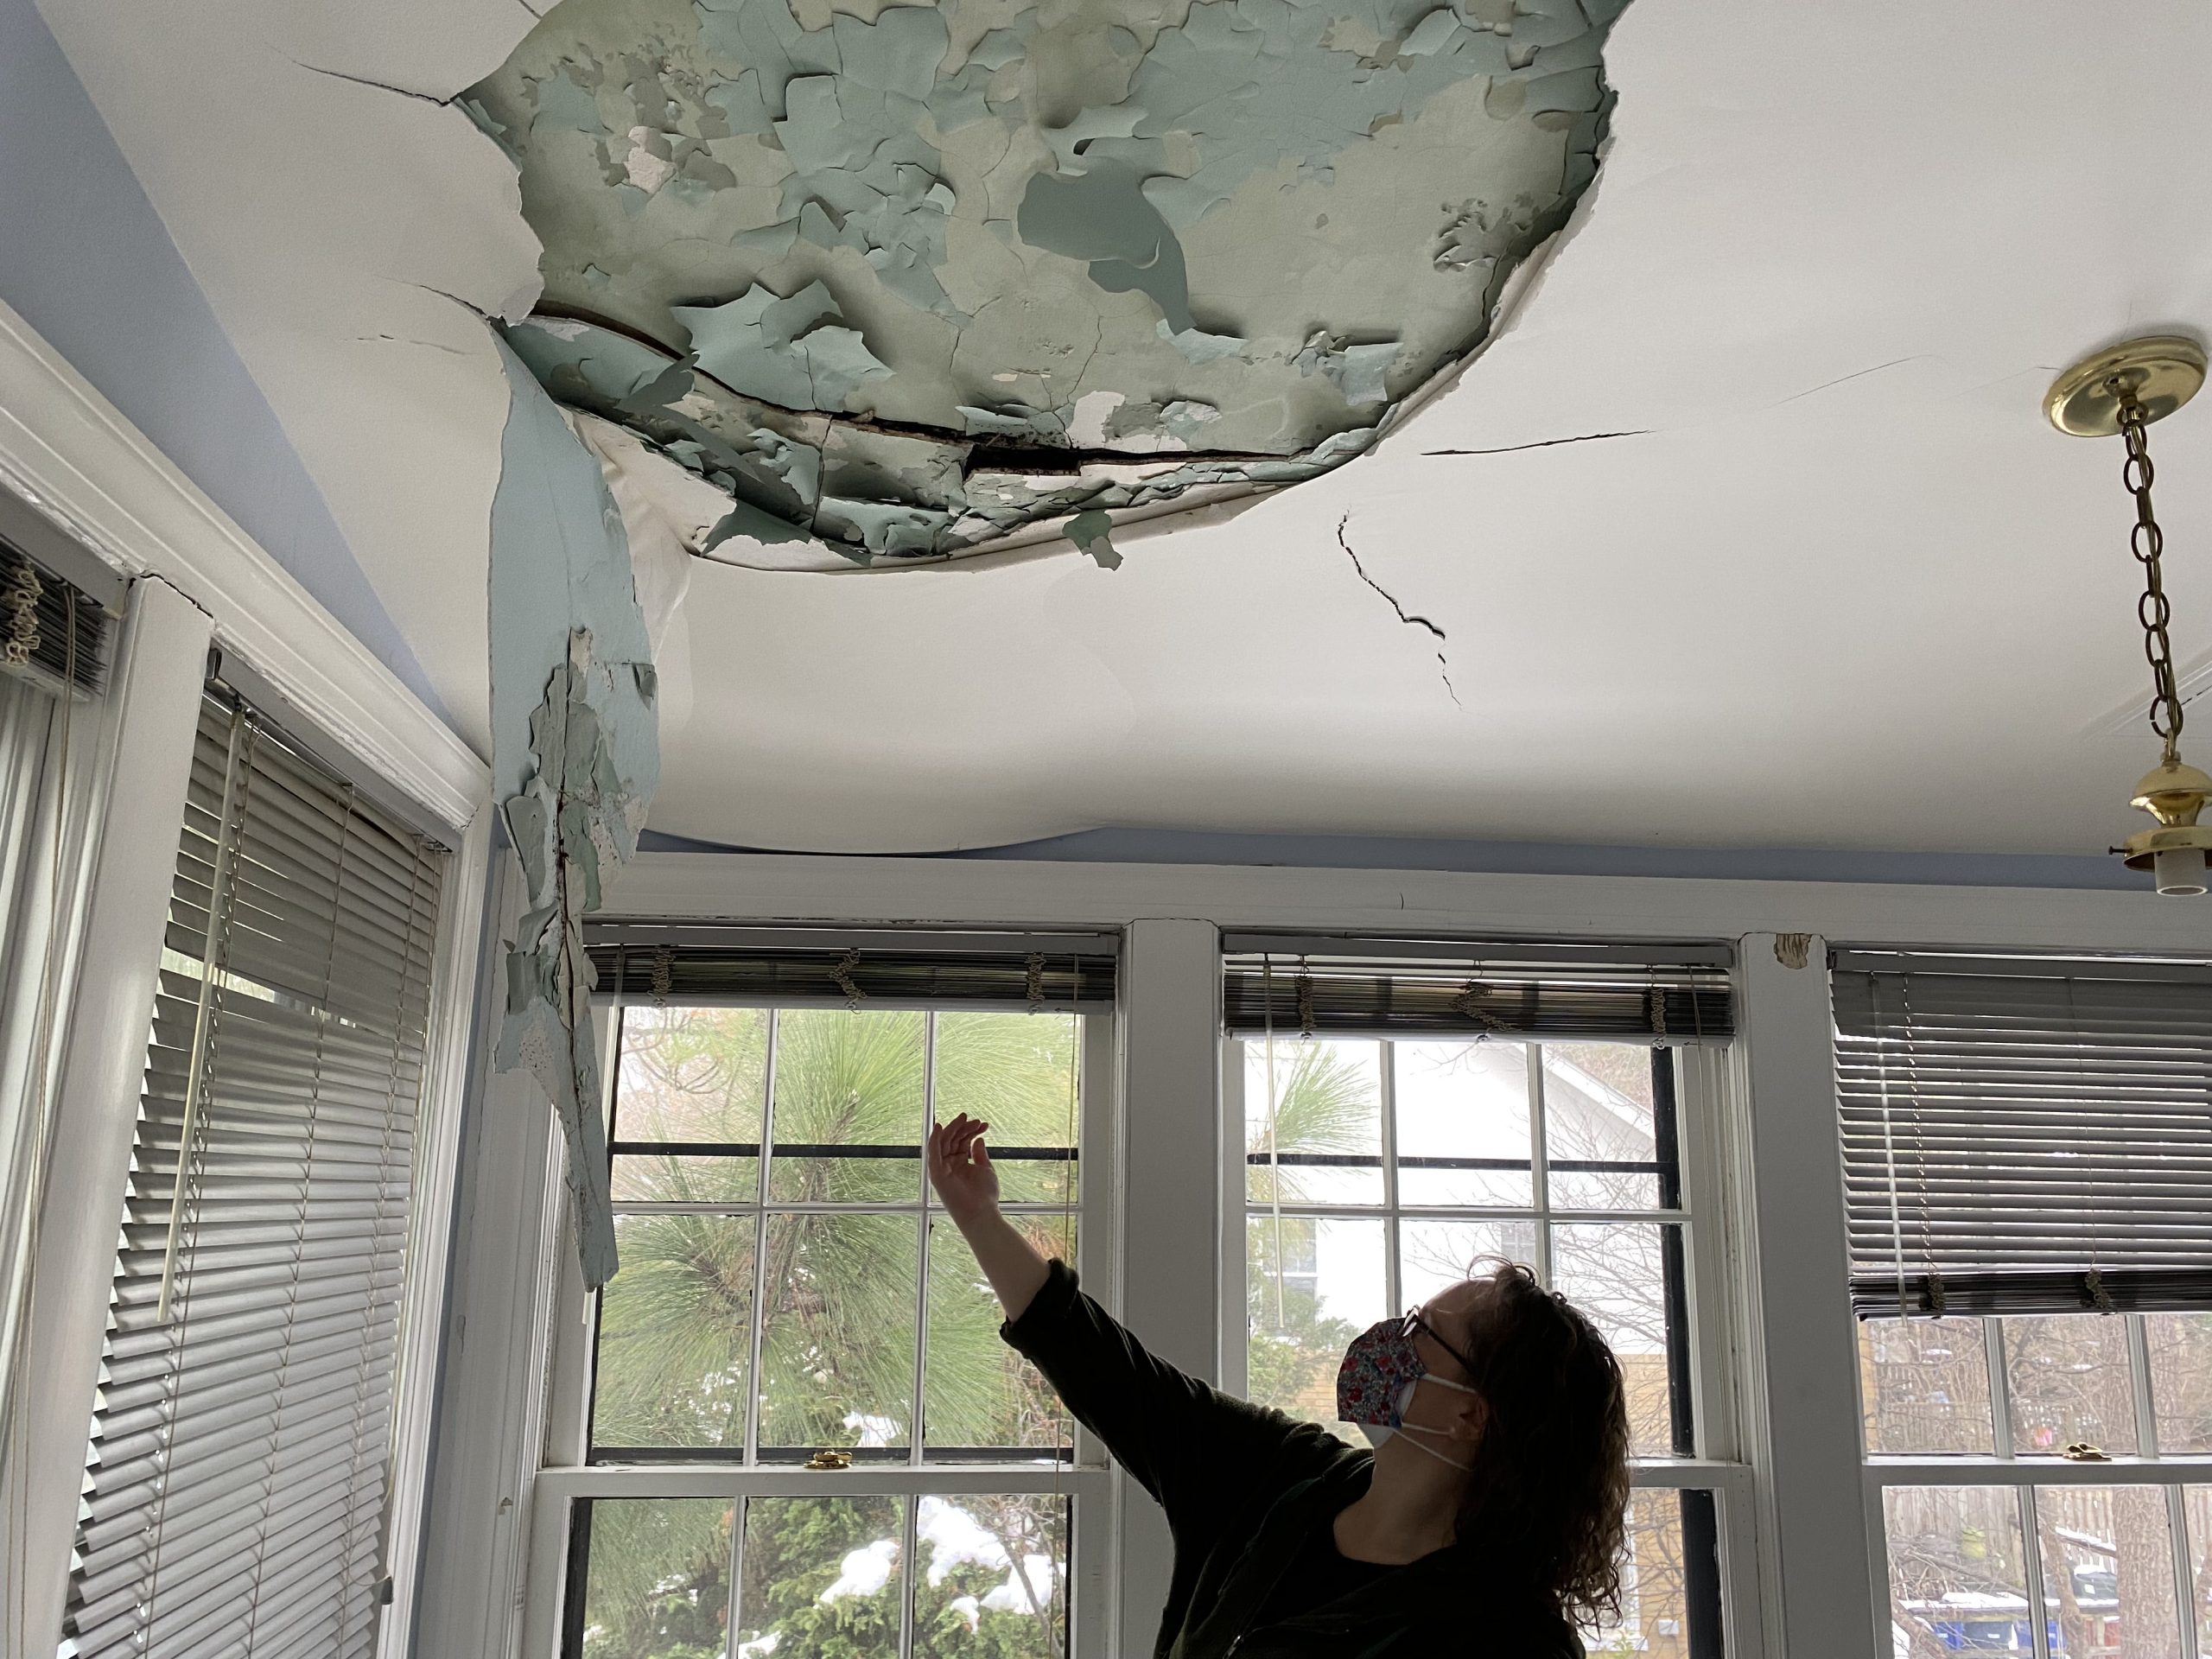 7 Investigates: Dangerous mold spreading through luxury apartments